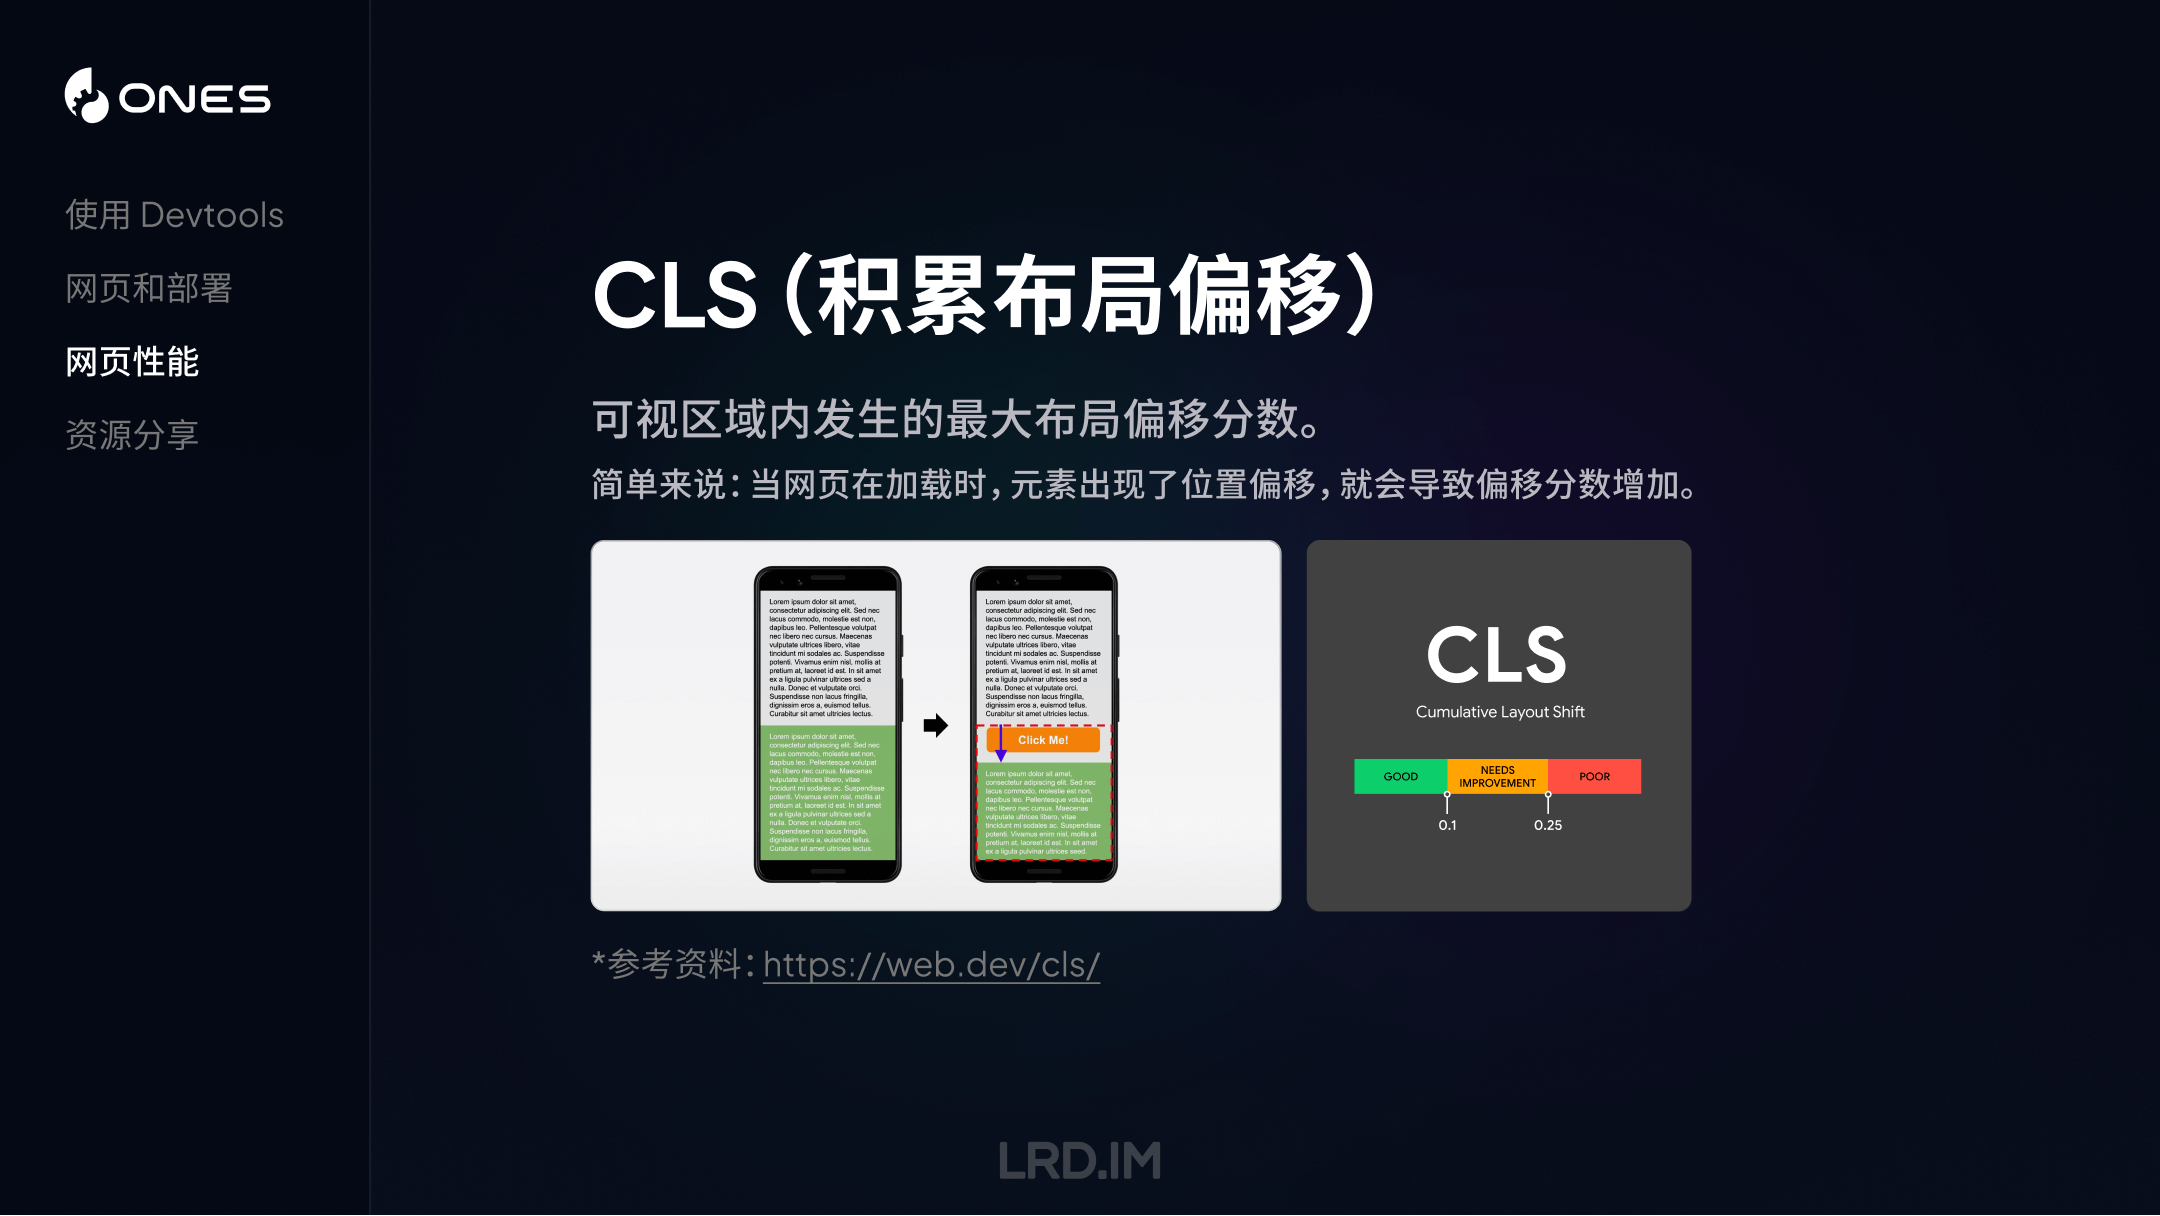 CLS（积累布局偏移）